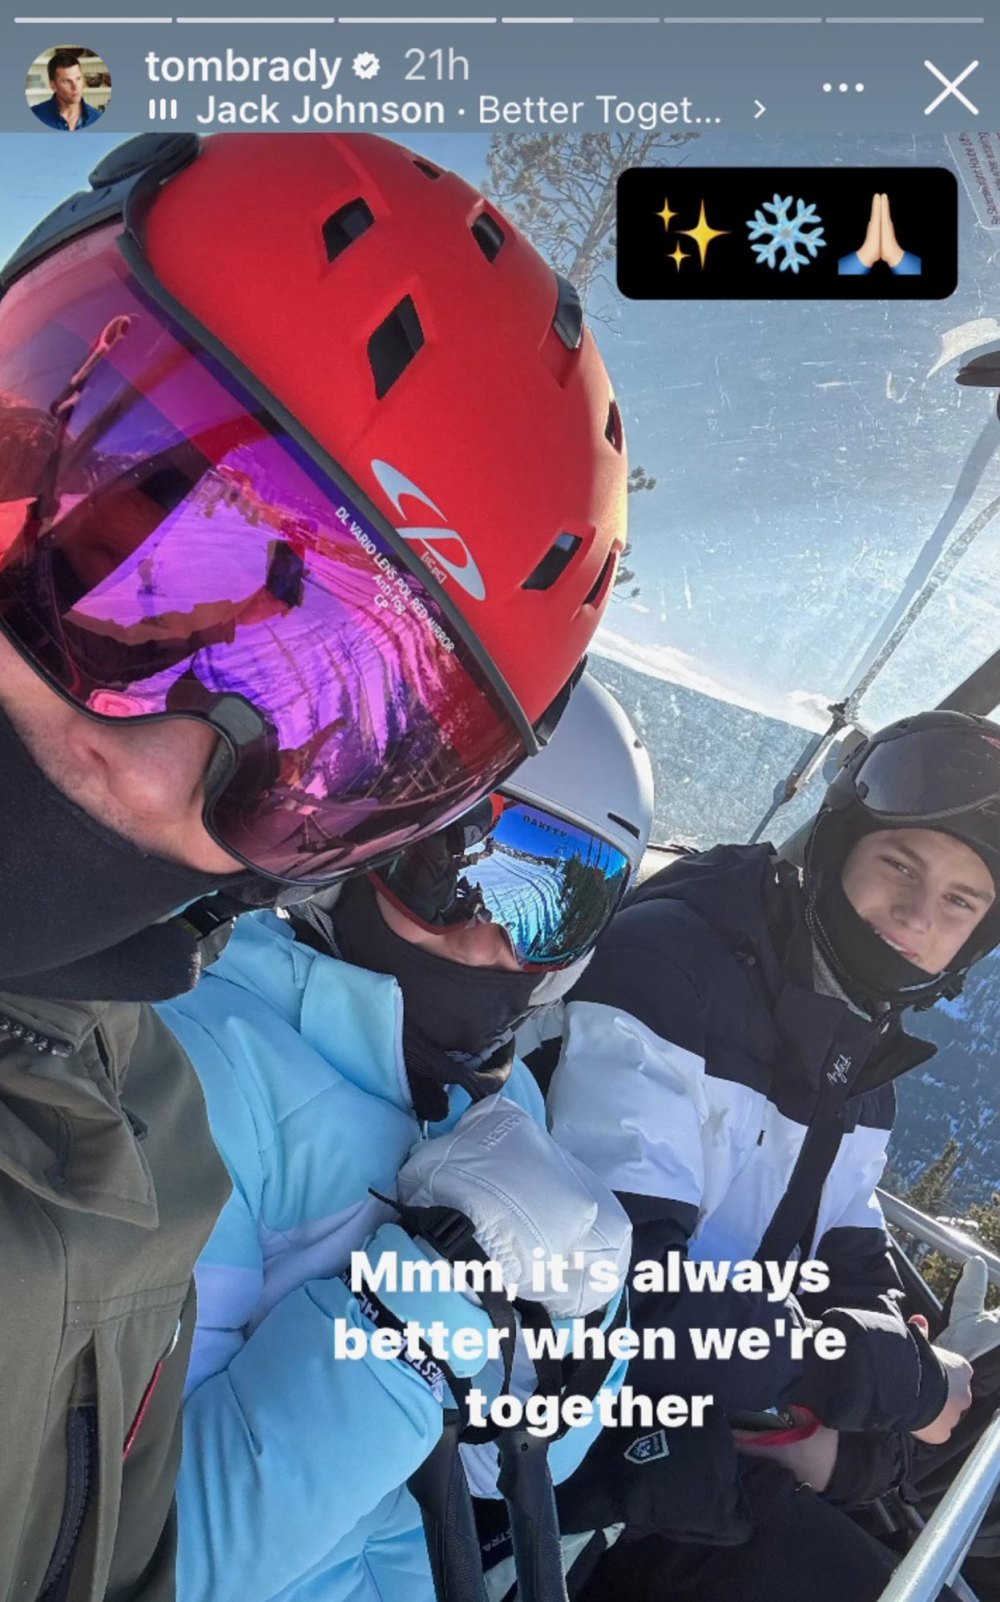 Tom Brady Shares Sweet Snaps from Holiday Ski Trip With Kids